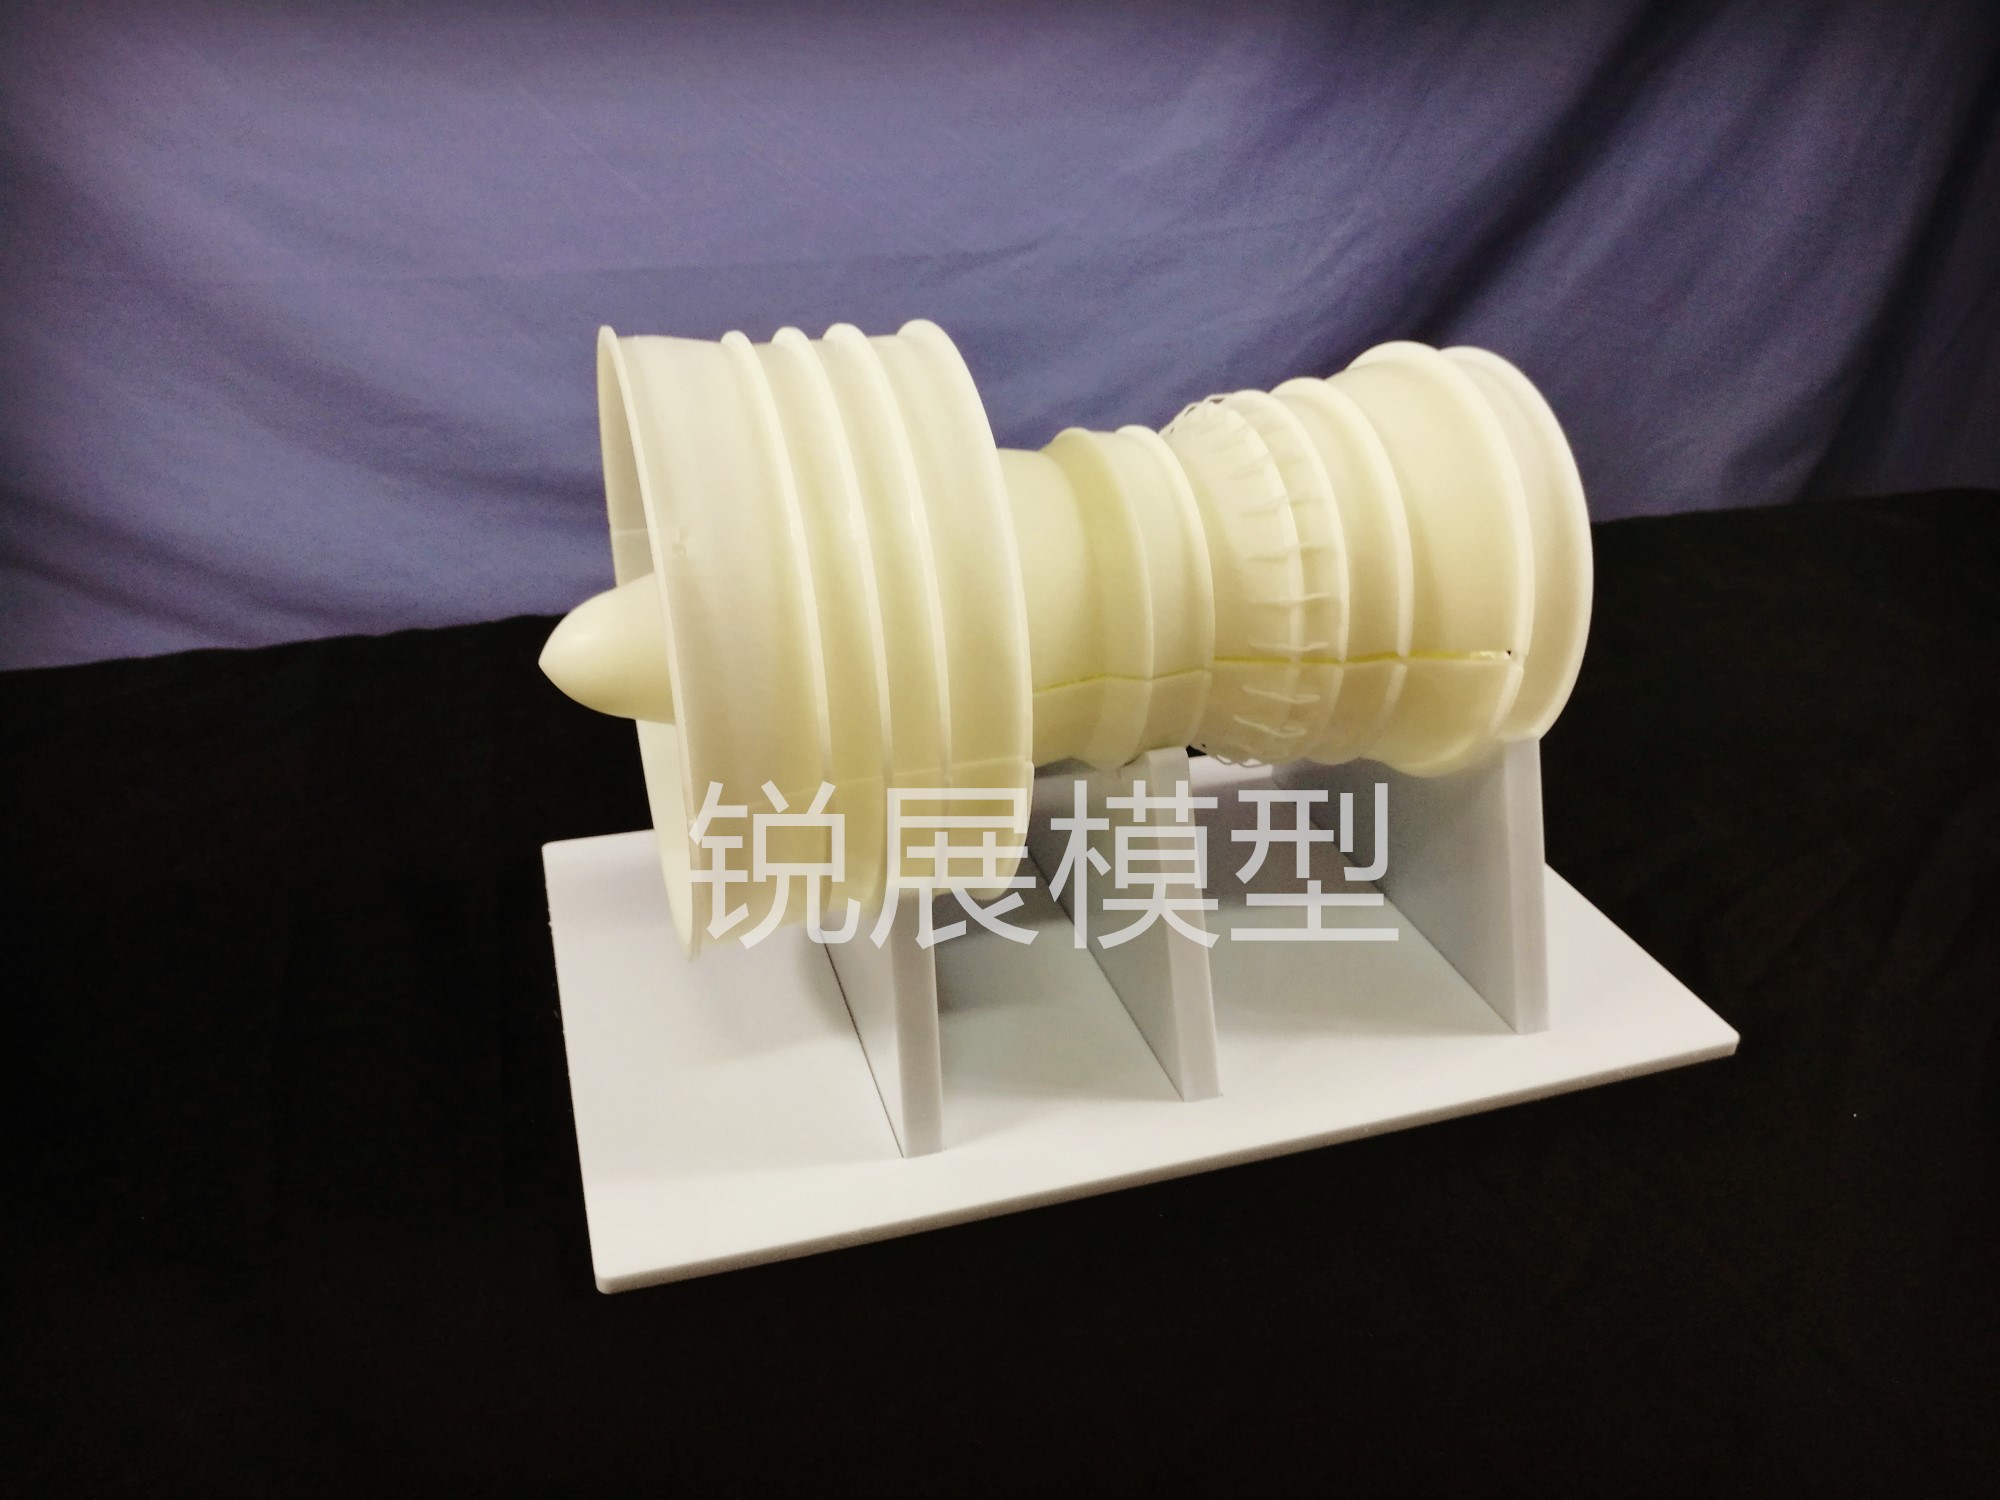 3D-print Aero-engine model